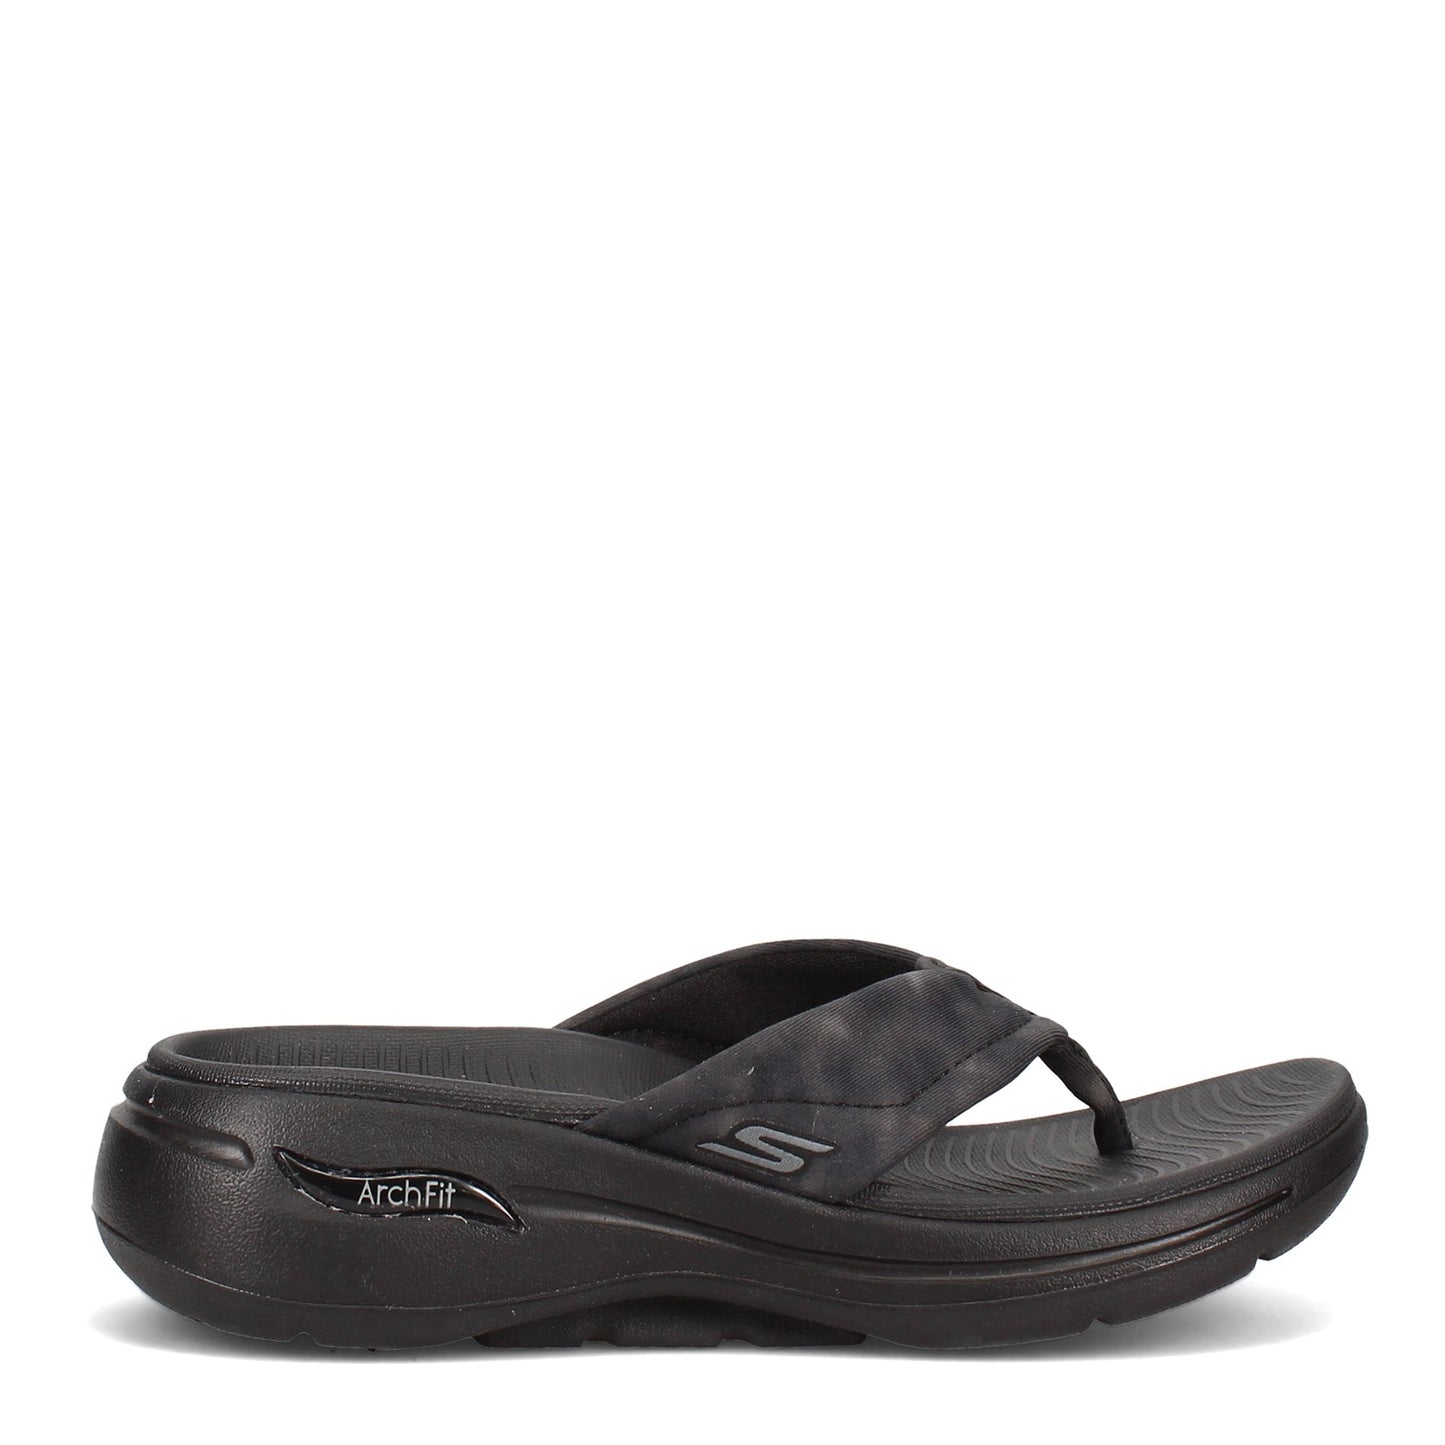 Peltz Shoes  Women's Skechers GOwalk Arch Fit - Astound Sandal BLACK 140220-BBK